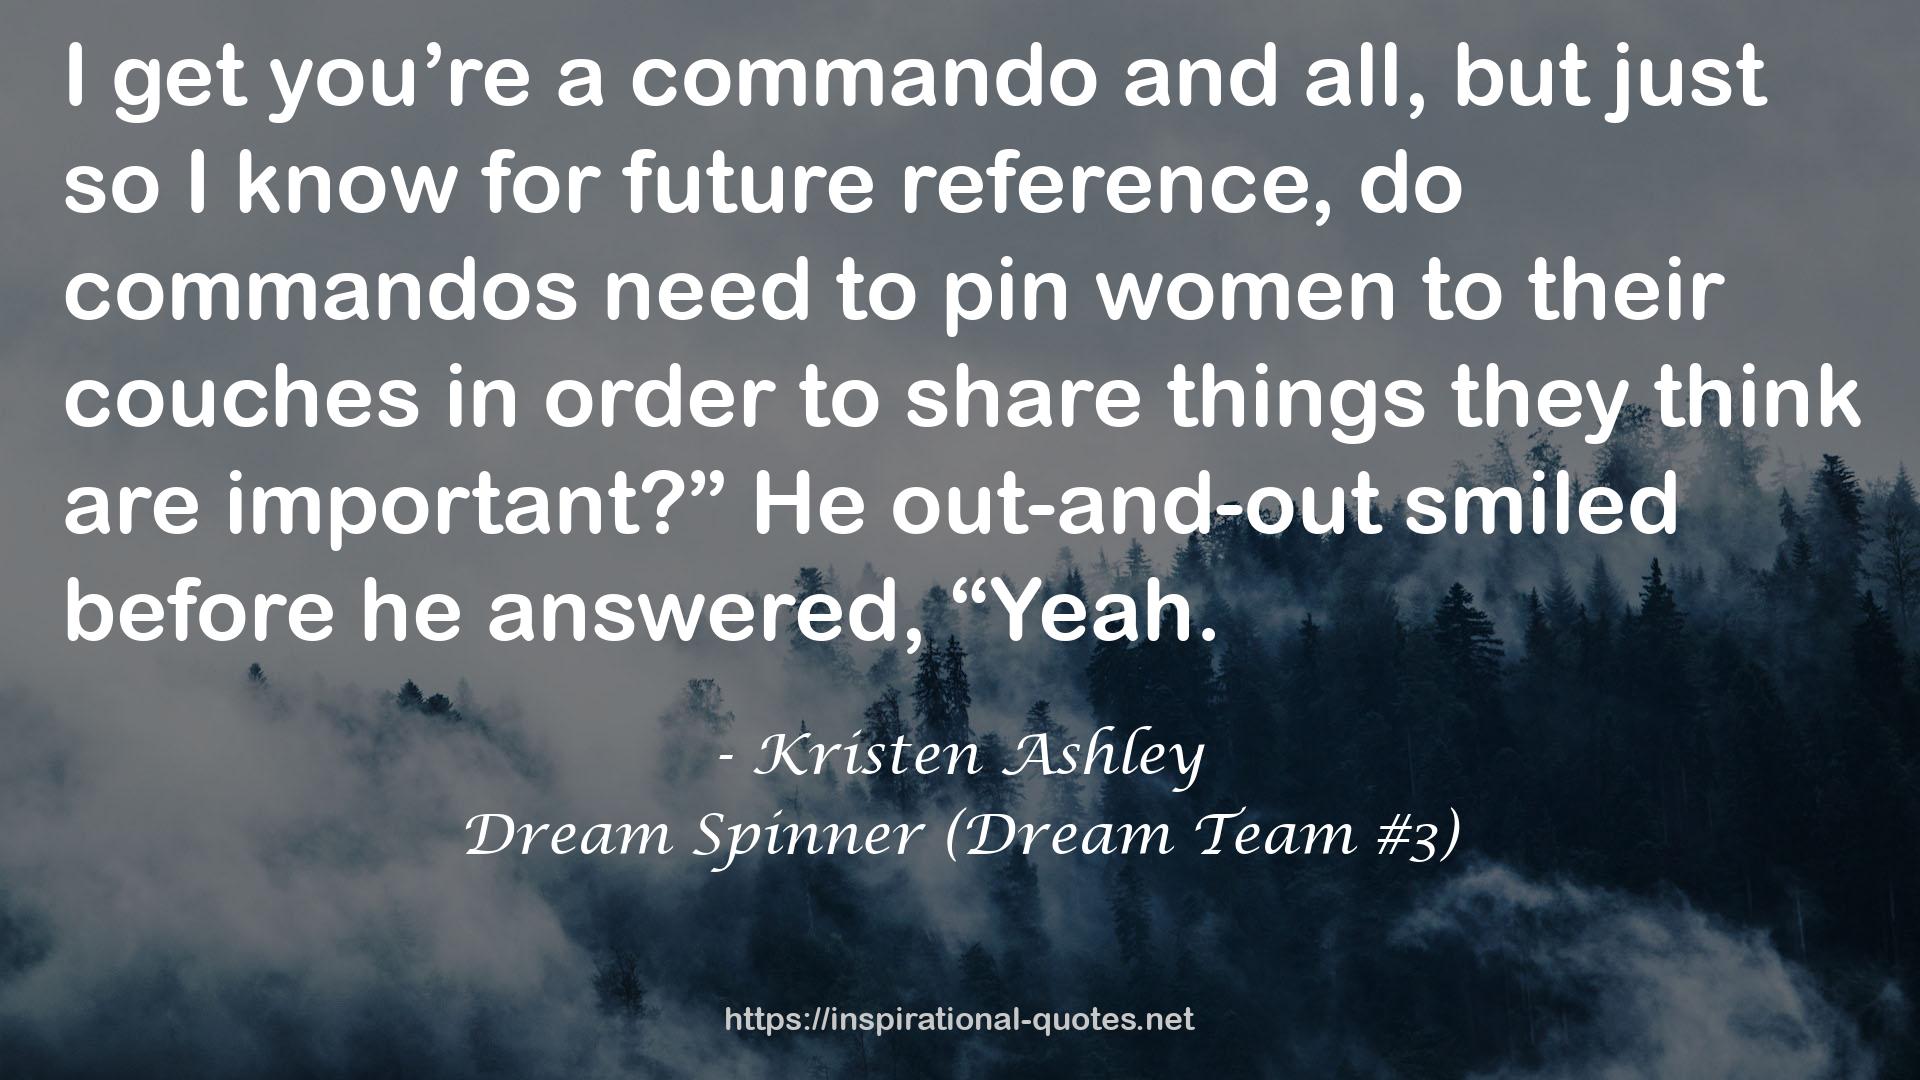 Dream Spinner (Dream Team #3) QUOTES